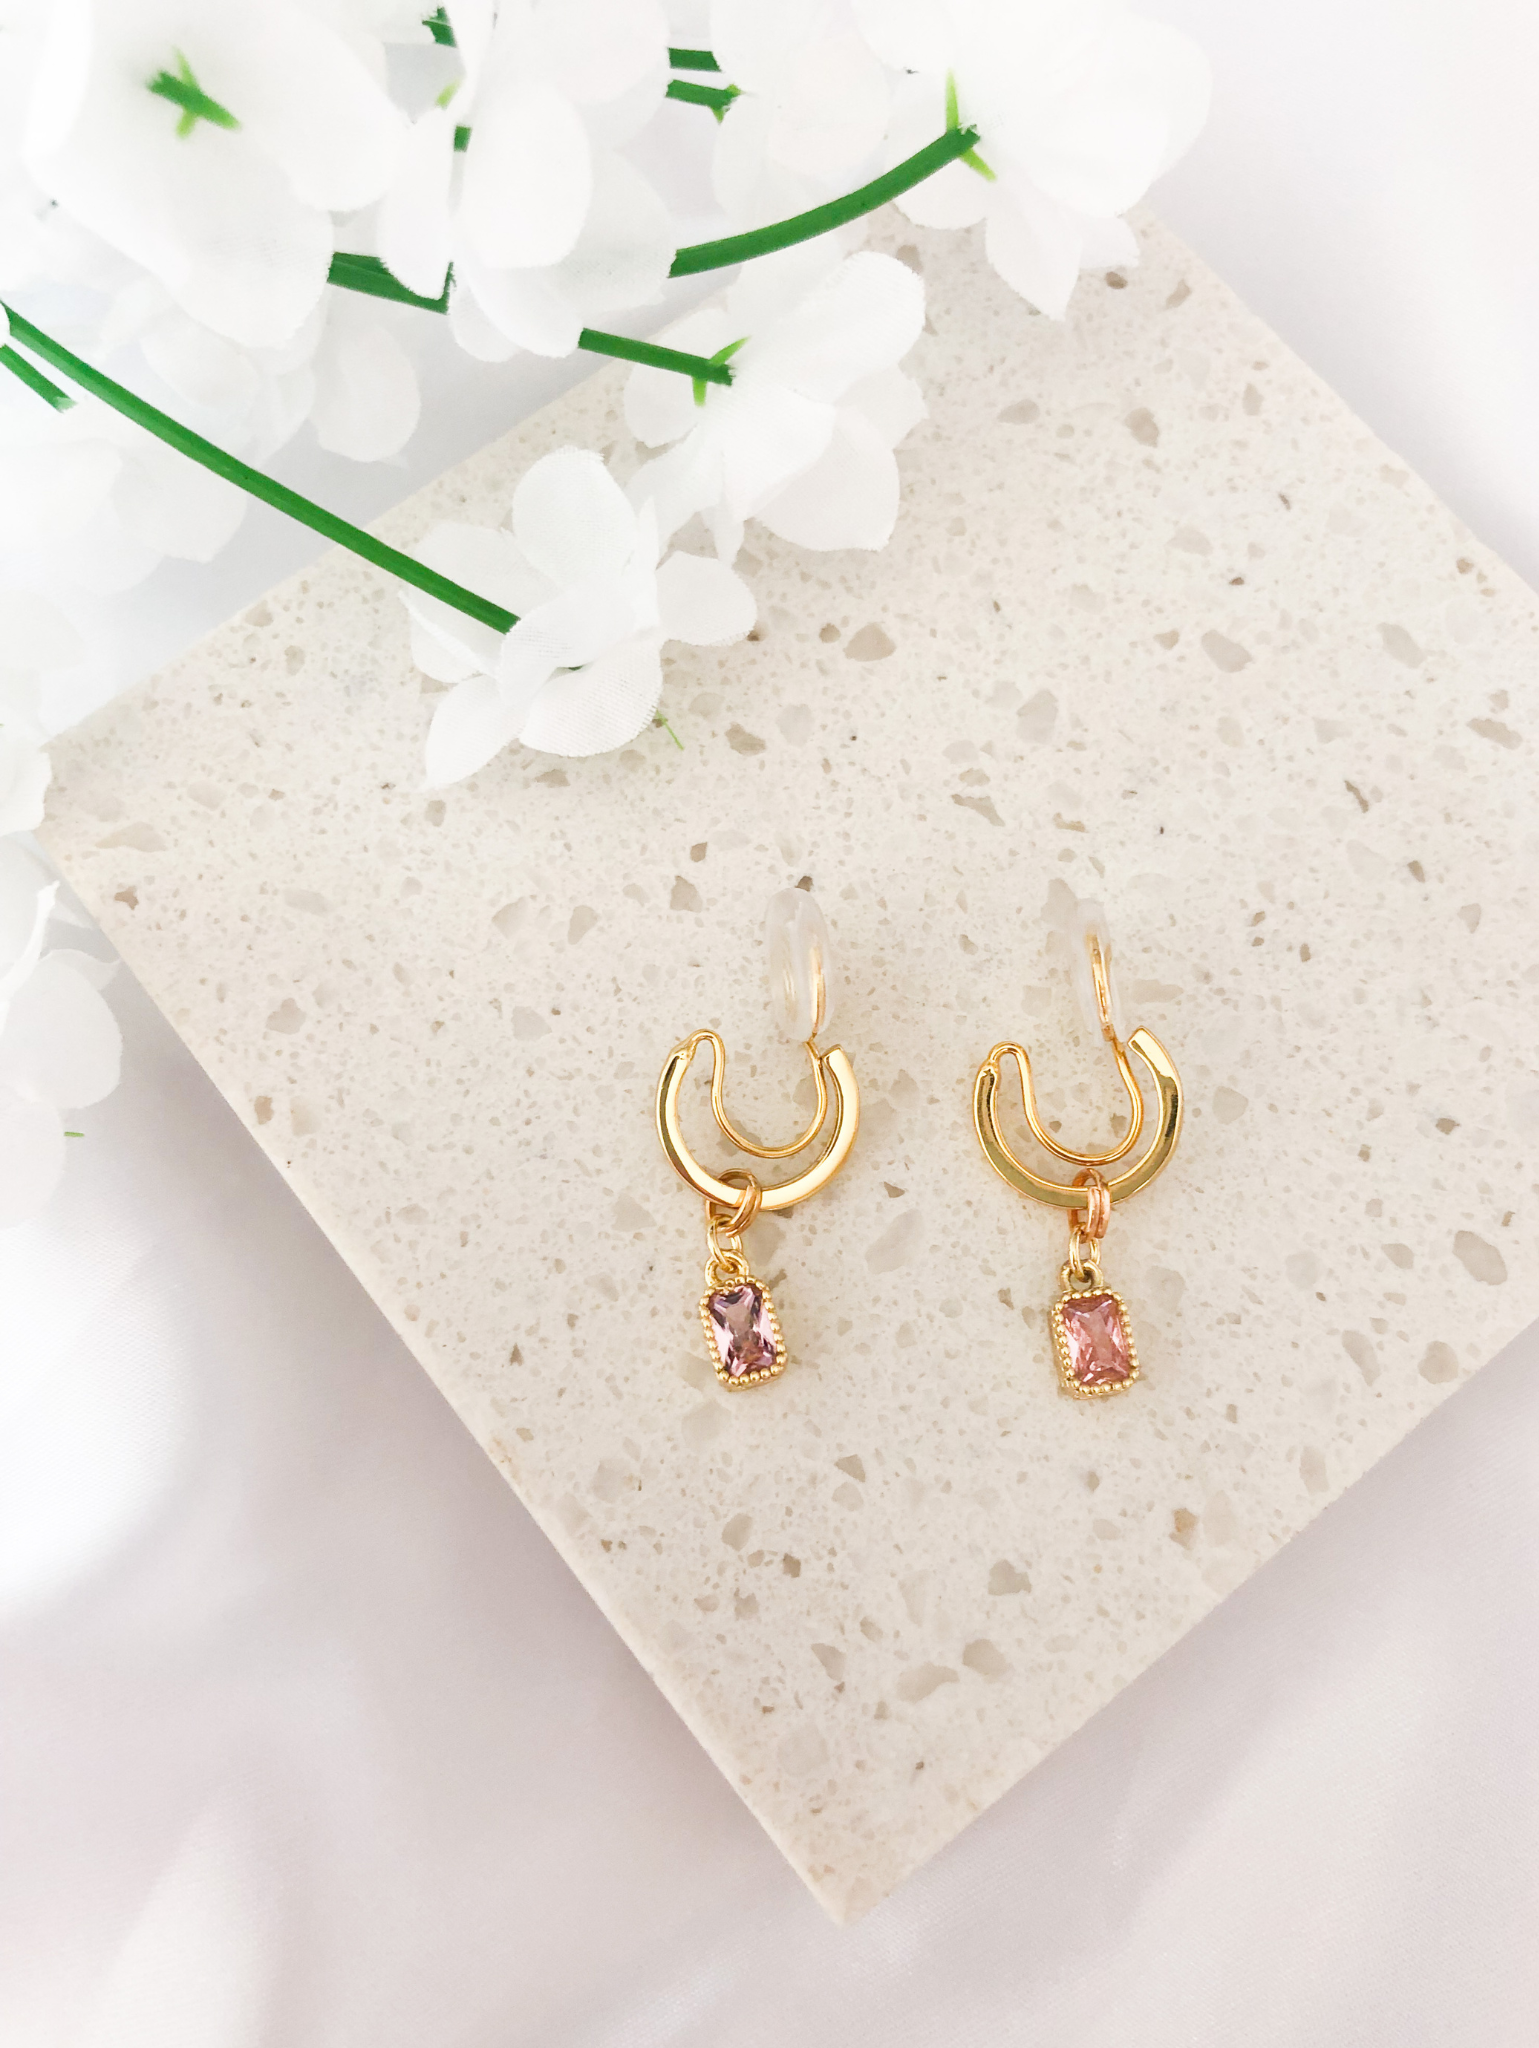 Buy Classic Huggie Hoop Gift Set Dainty Hoop Earrings Earring Set Gift  Ready Gift for Her Gift for Mom Gift Set Online in India - Etsy